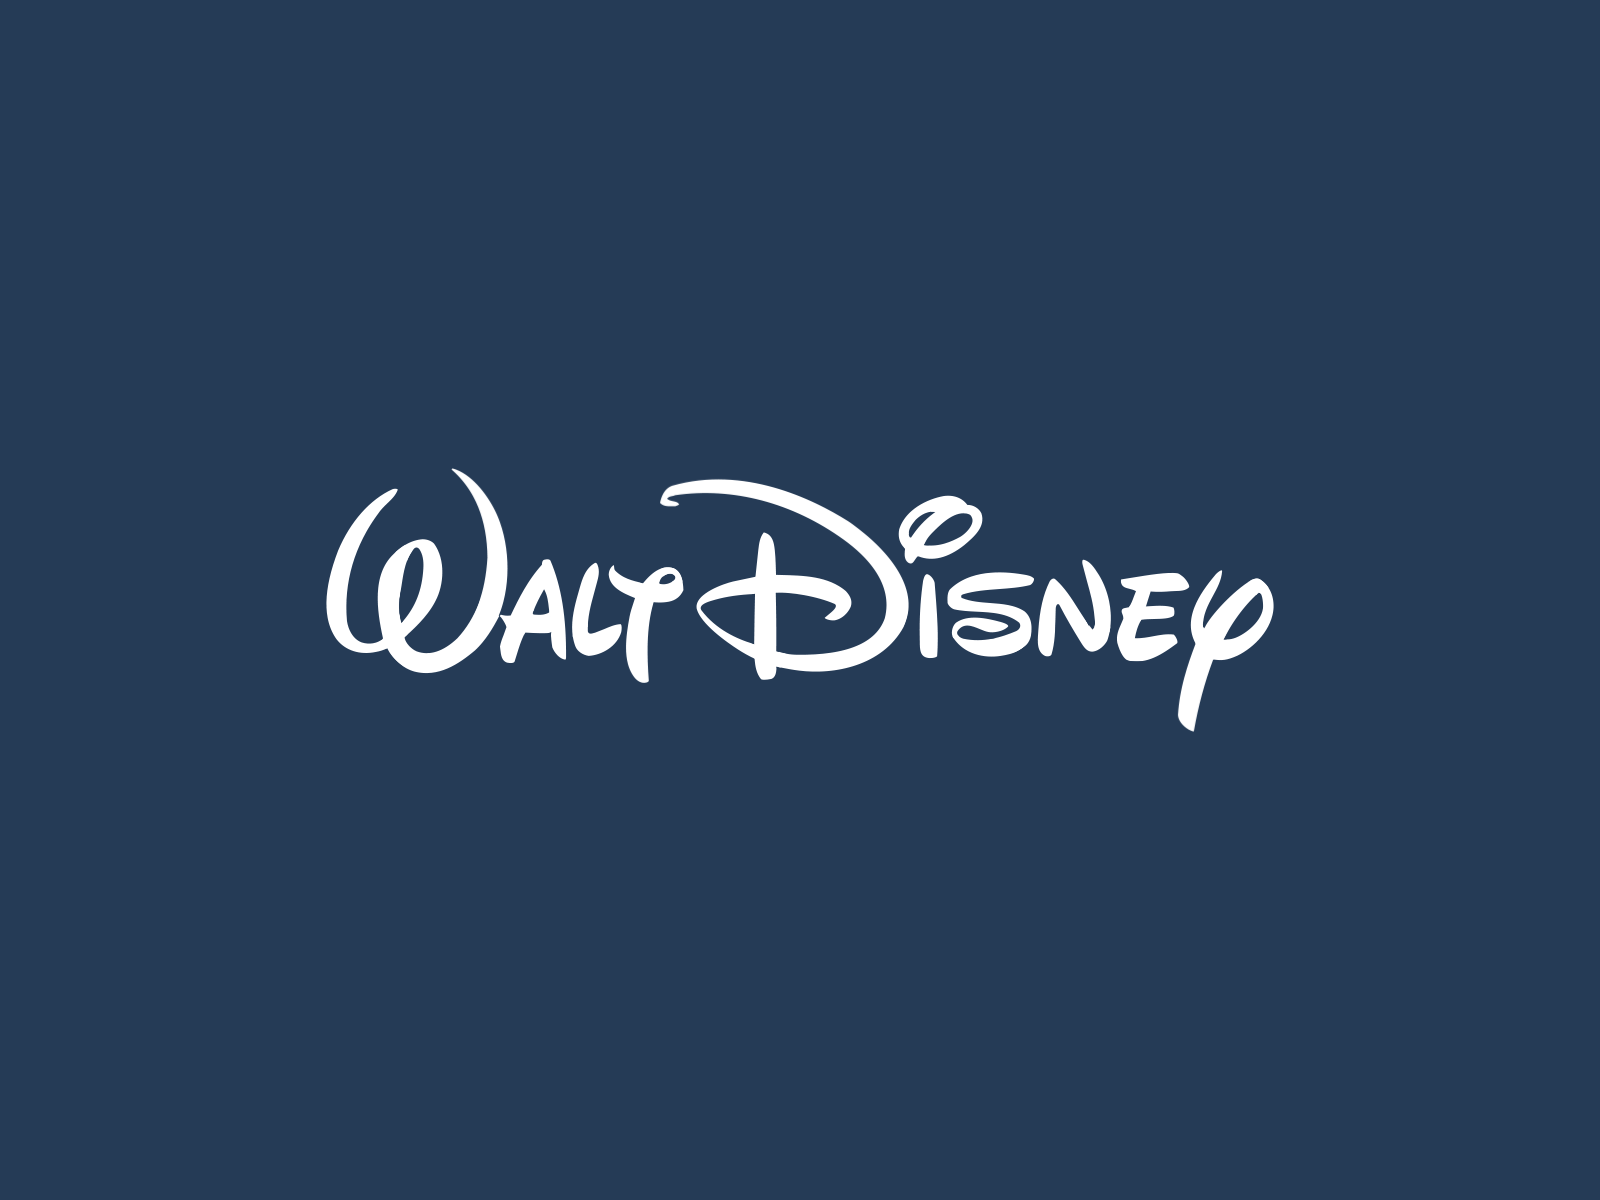 Walt Disney Logo Animation by Twins Motion on Dribbble